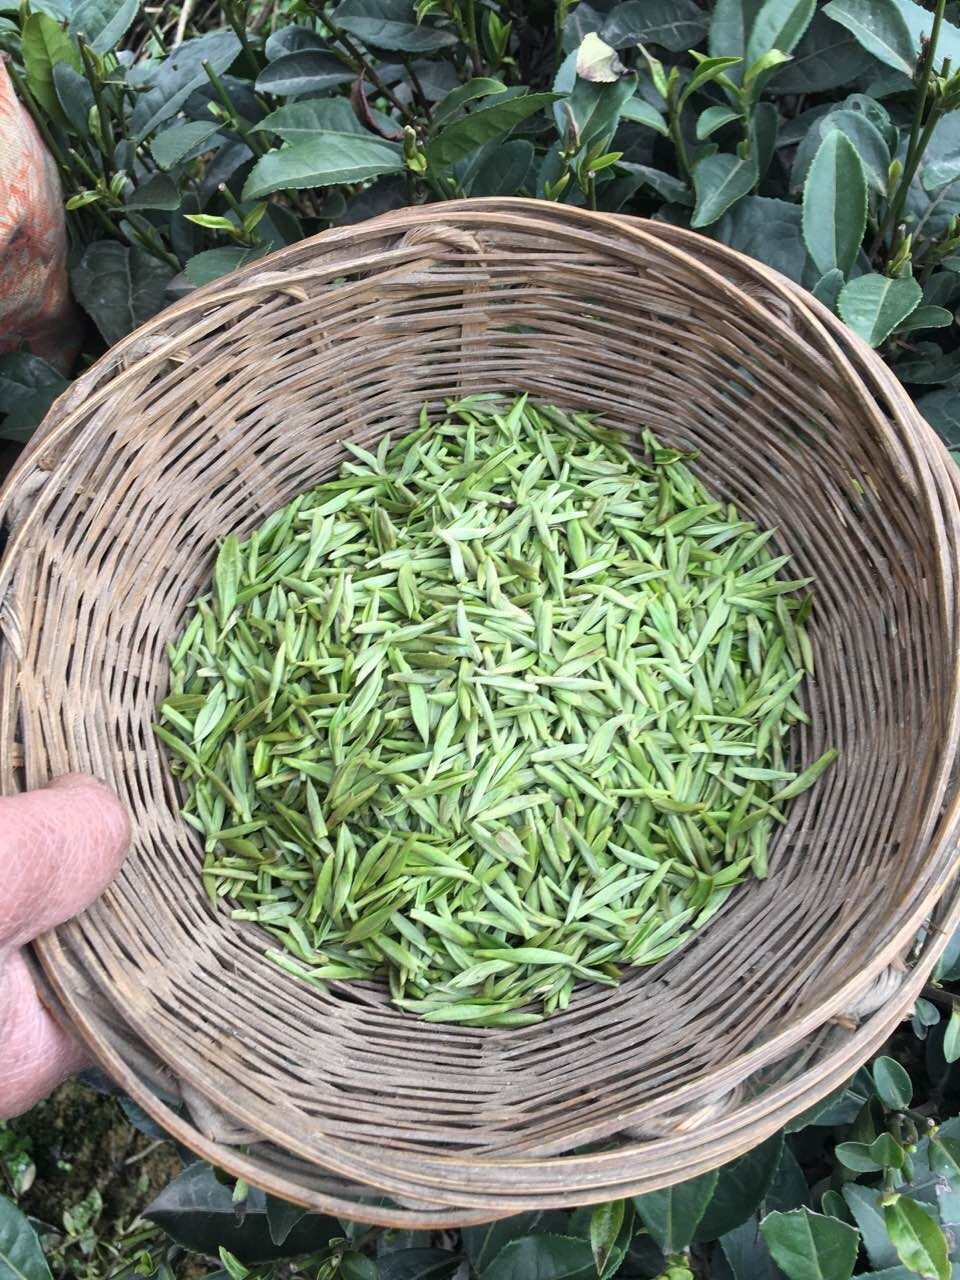 Taiwan_VerLeaf Teas Imported_VeriLeaf Eastrise 8 Early spring precision plucking, single bud green tea All Bud Teas in Basket.jpg